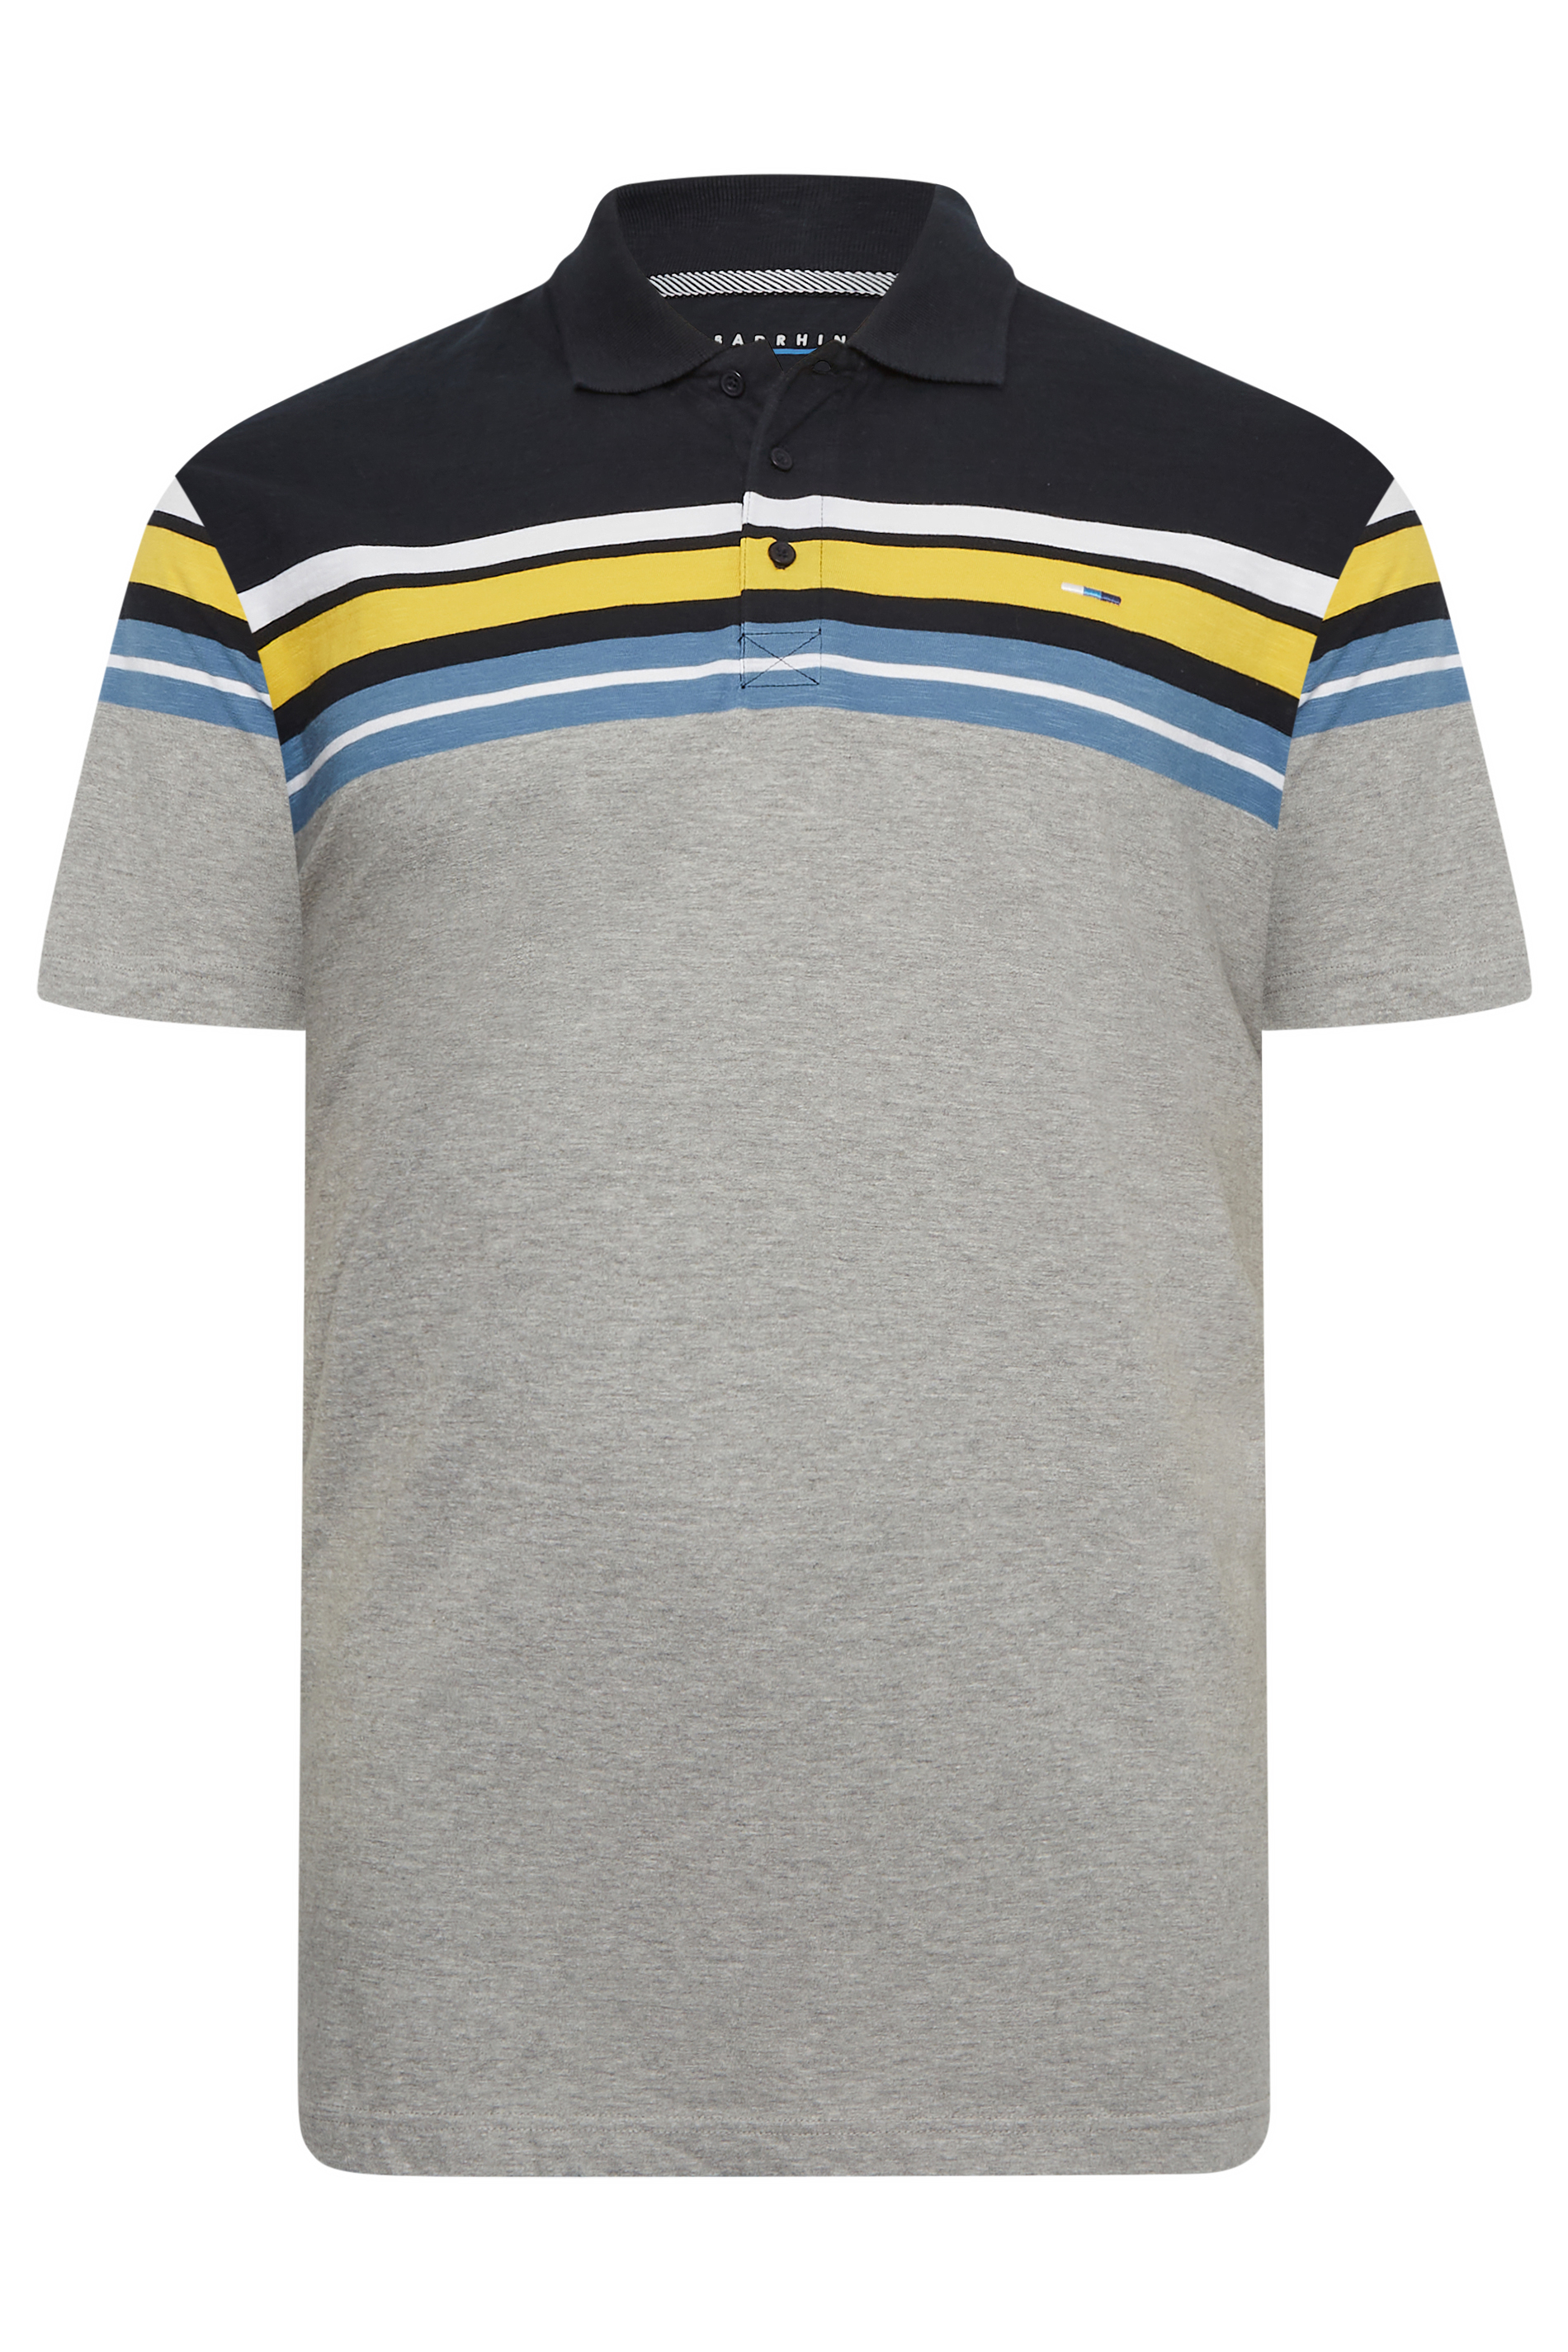 BadRhino Big & Tall Grey Stripe Polo Shirt | BadRhino 3